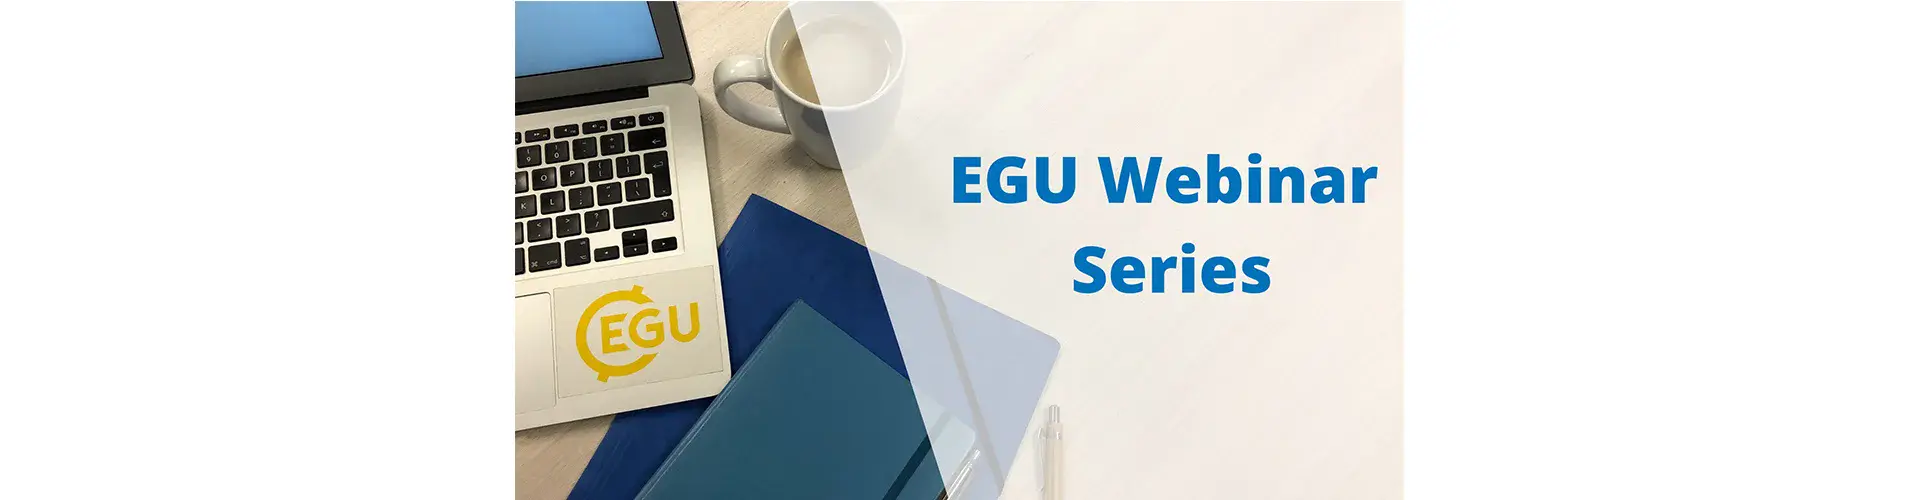 EGU Webinar header (Credit: EGU)